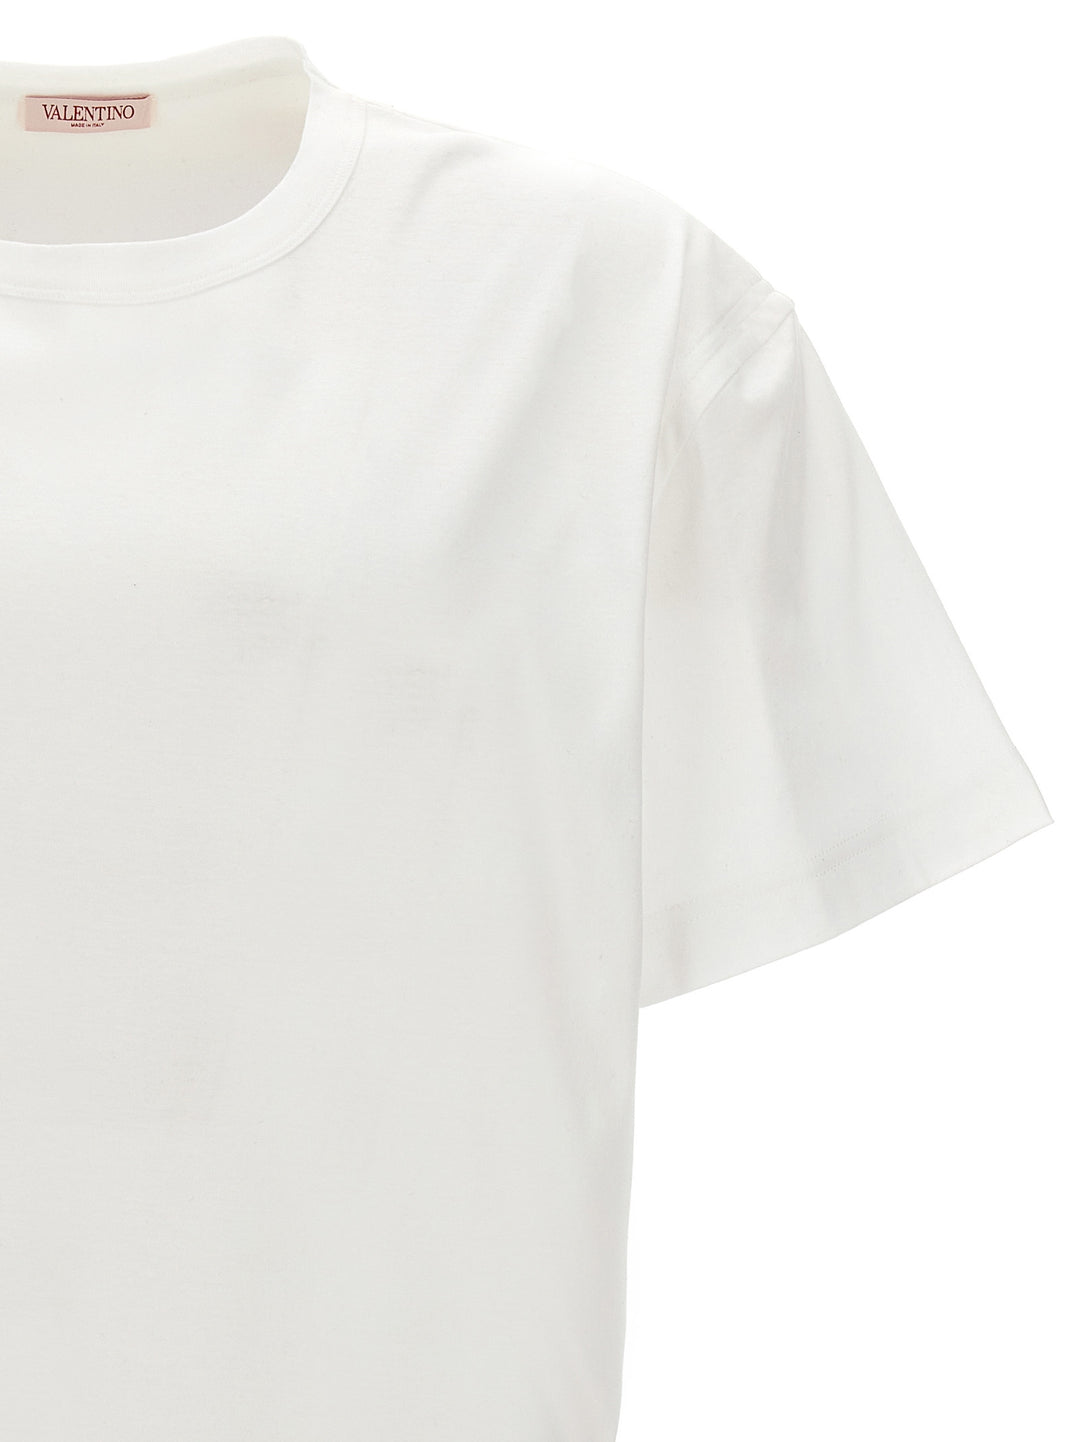 Maison Valentino Label T Shirt Bianco